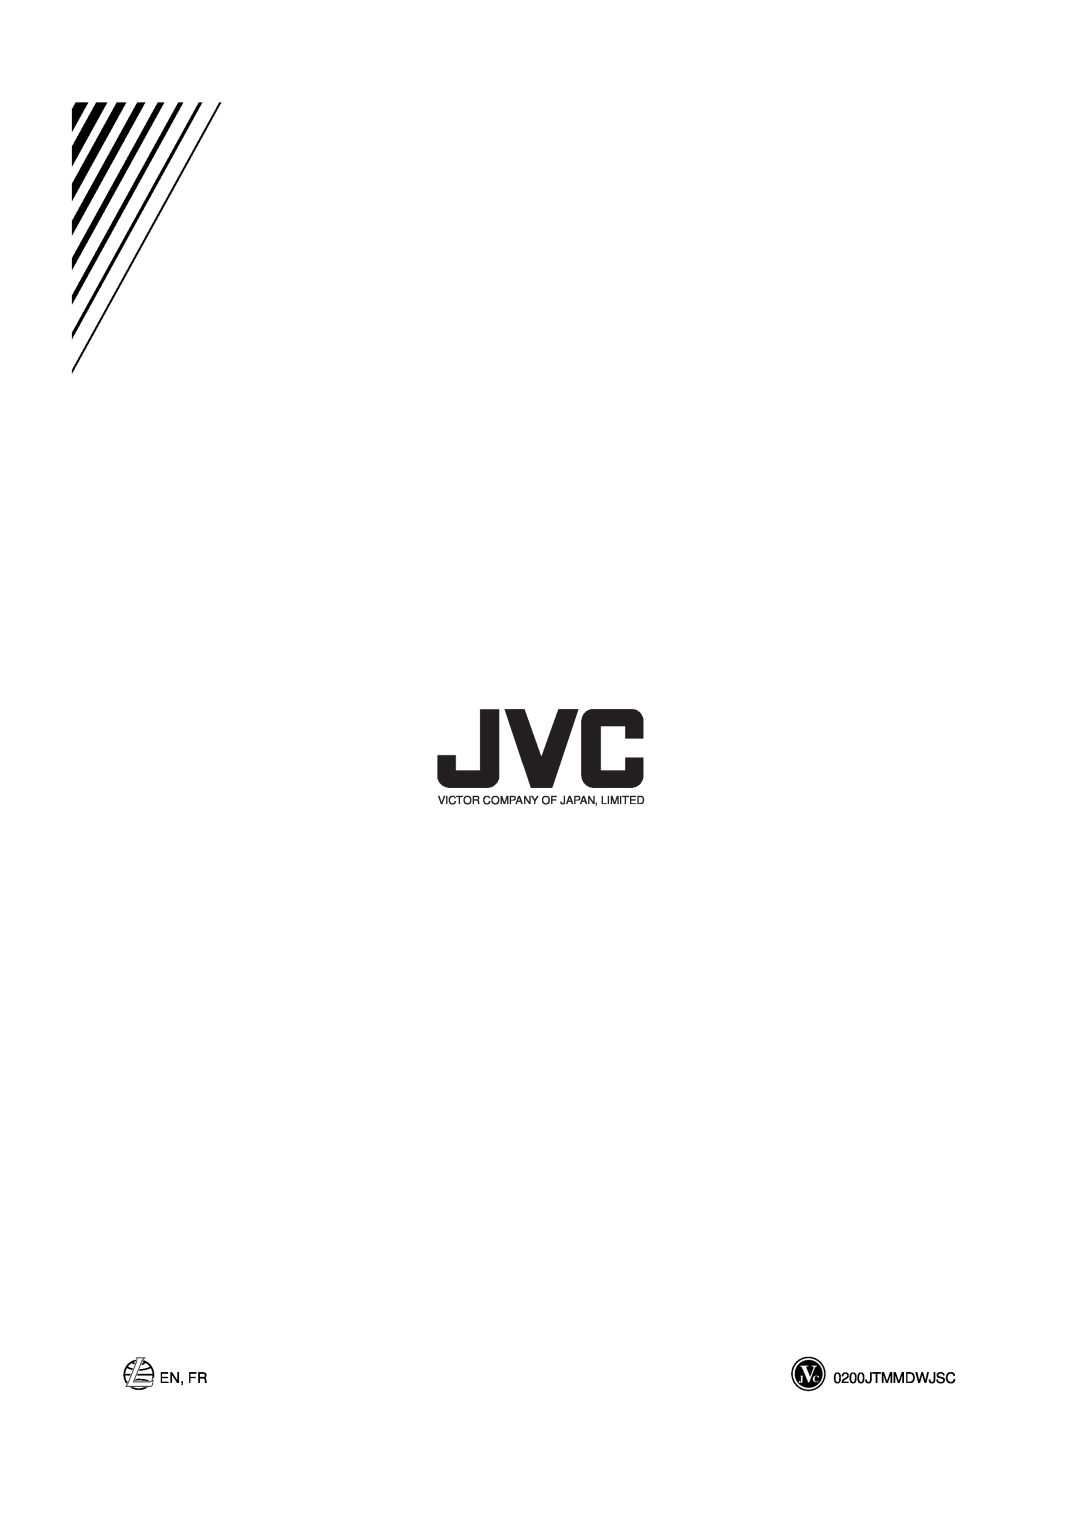 JVC FS-G6, LVT0375-001A, XT-UXG6 manual En, Fr, 0200JTMMDWJSC, Victor Company Of Japan, Limited 